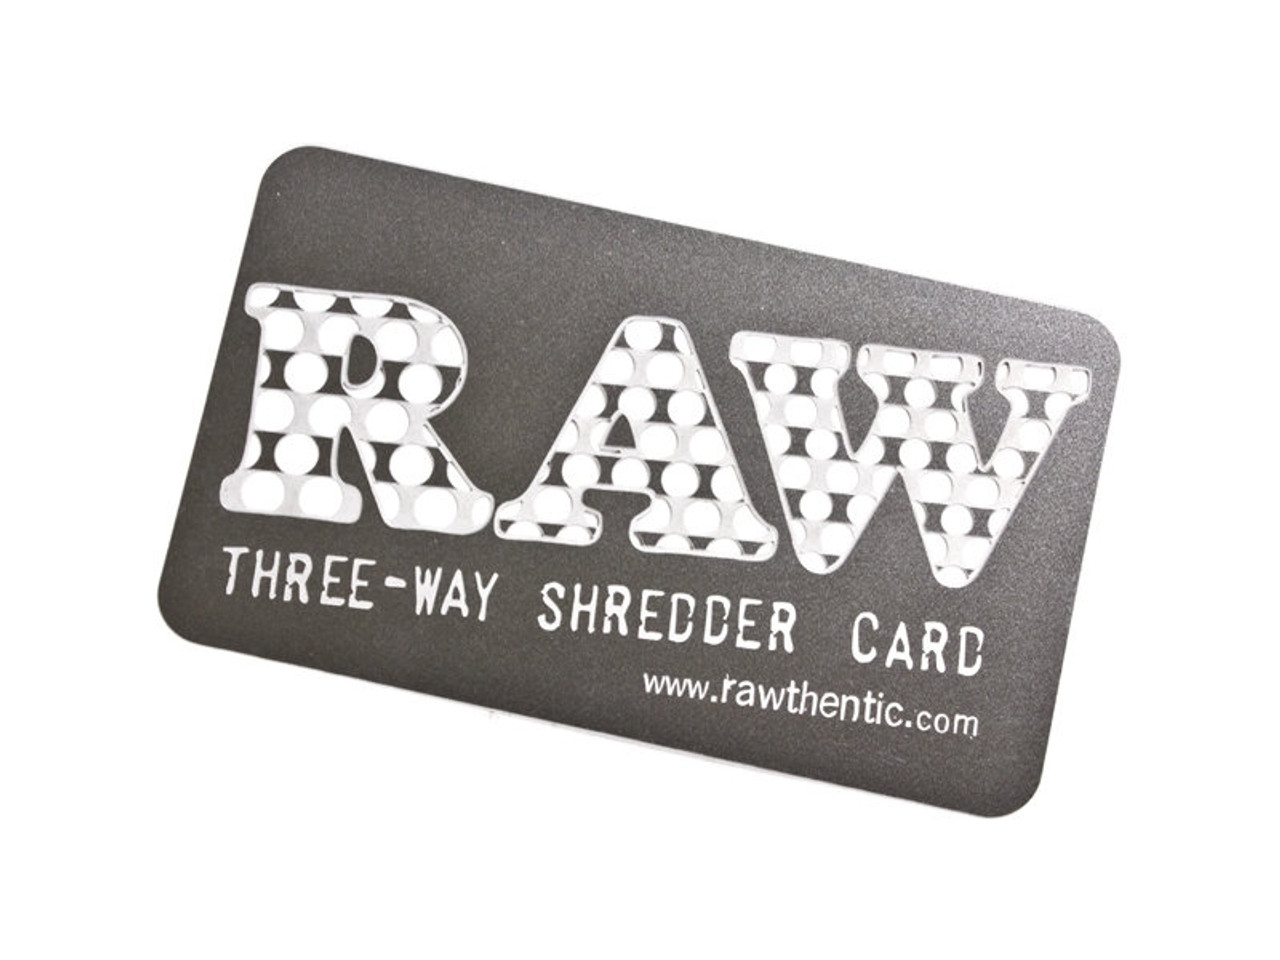 Shredder Pin Trading Card